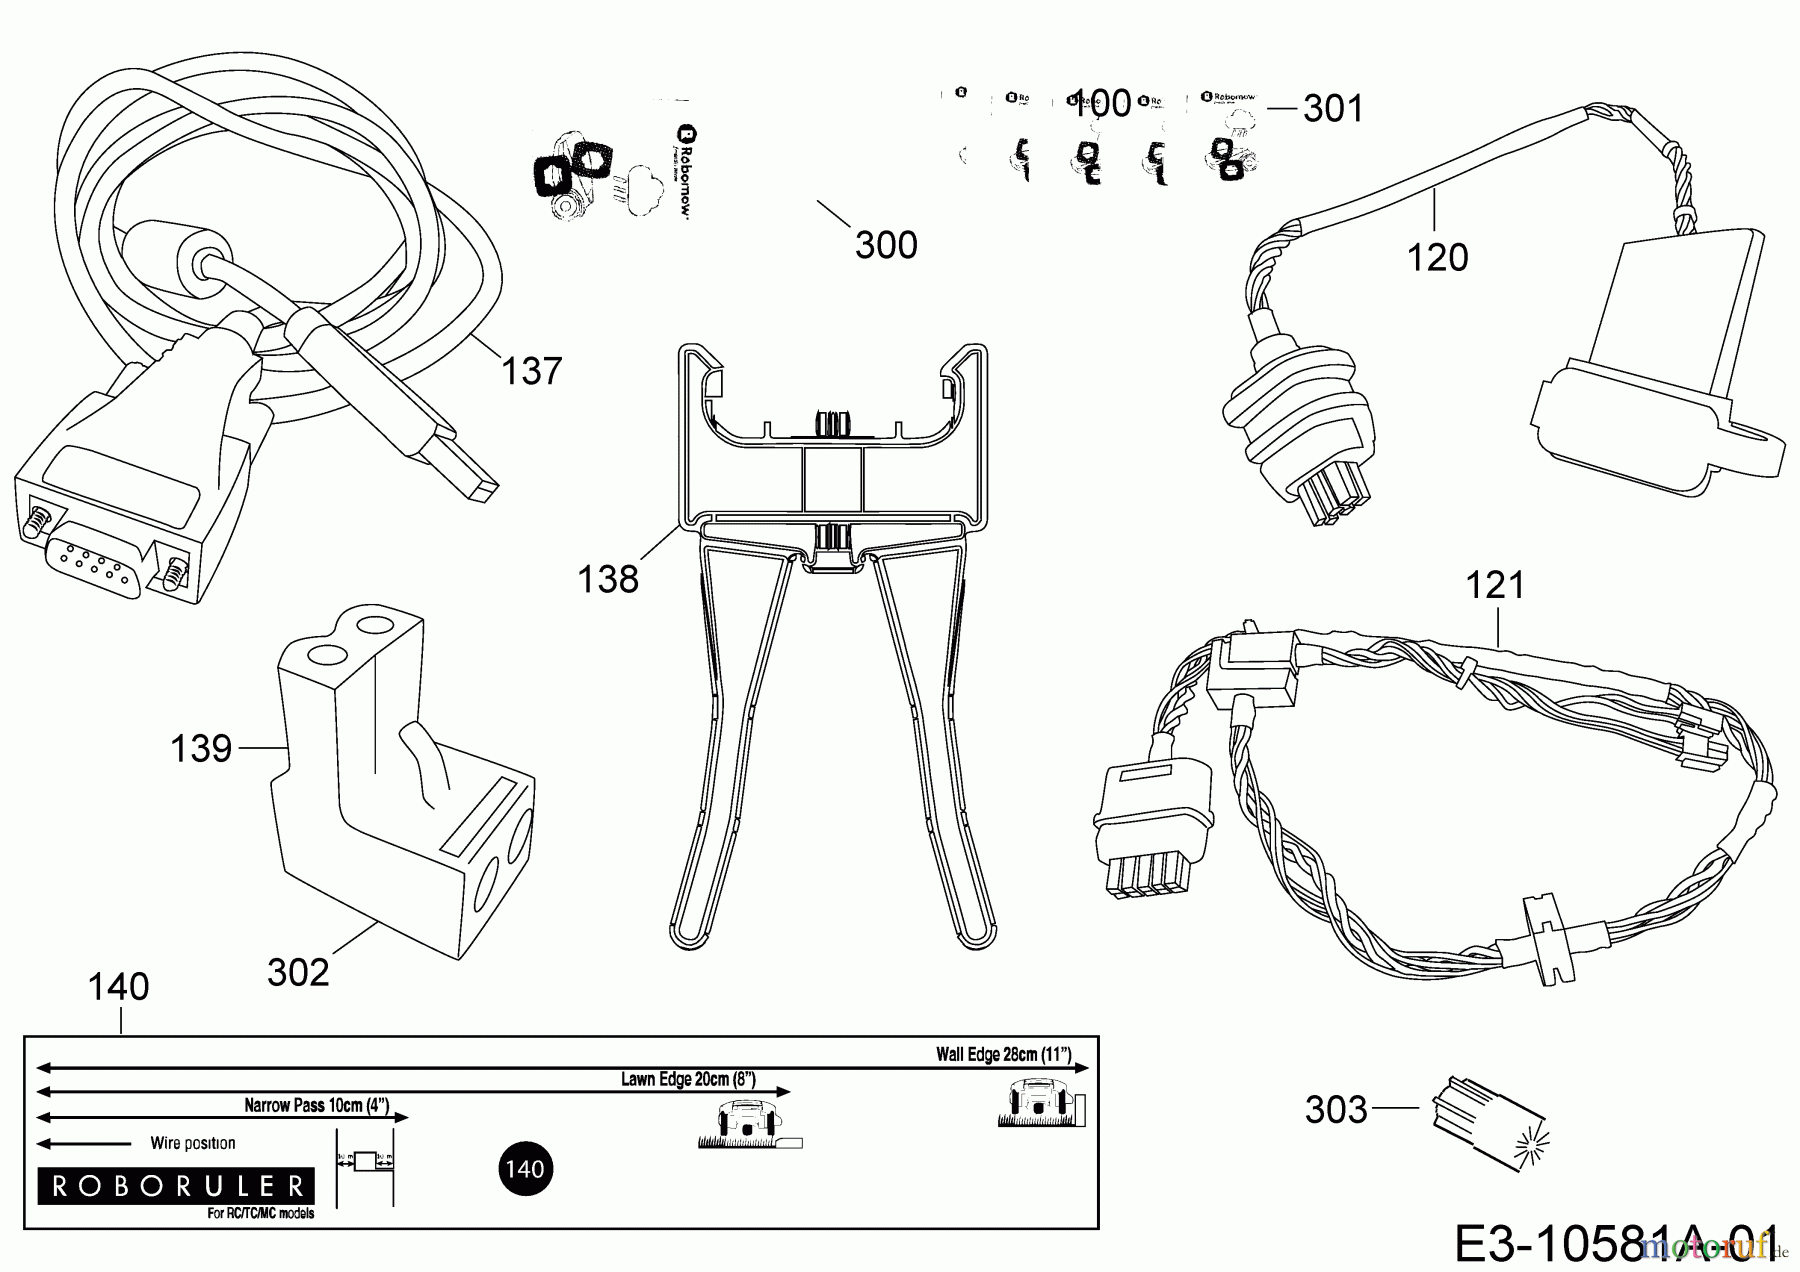  Robomow Mähroboter RC302 PRD7002A  (2014) Kabel, Kabelanschluß, Regensensor, Werkzeug